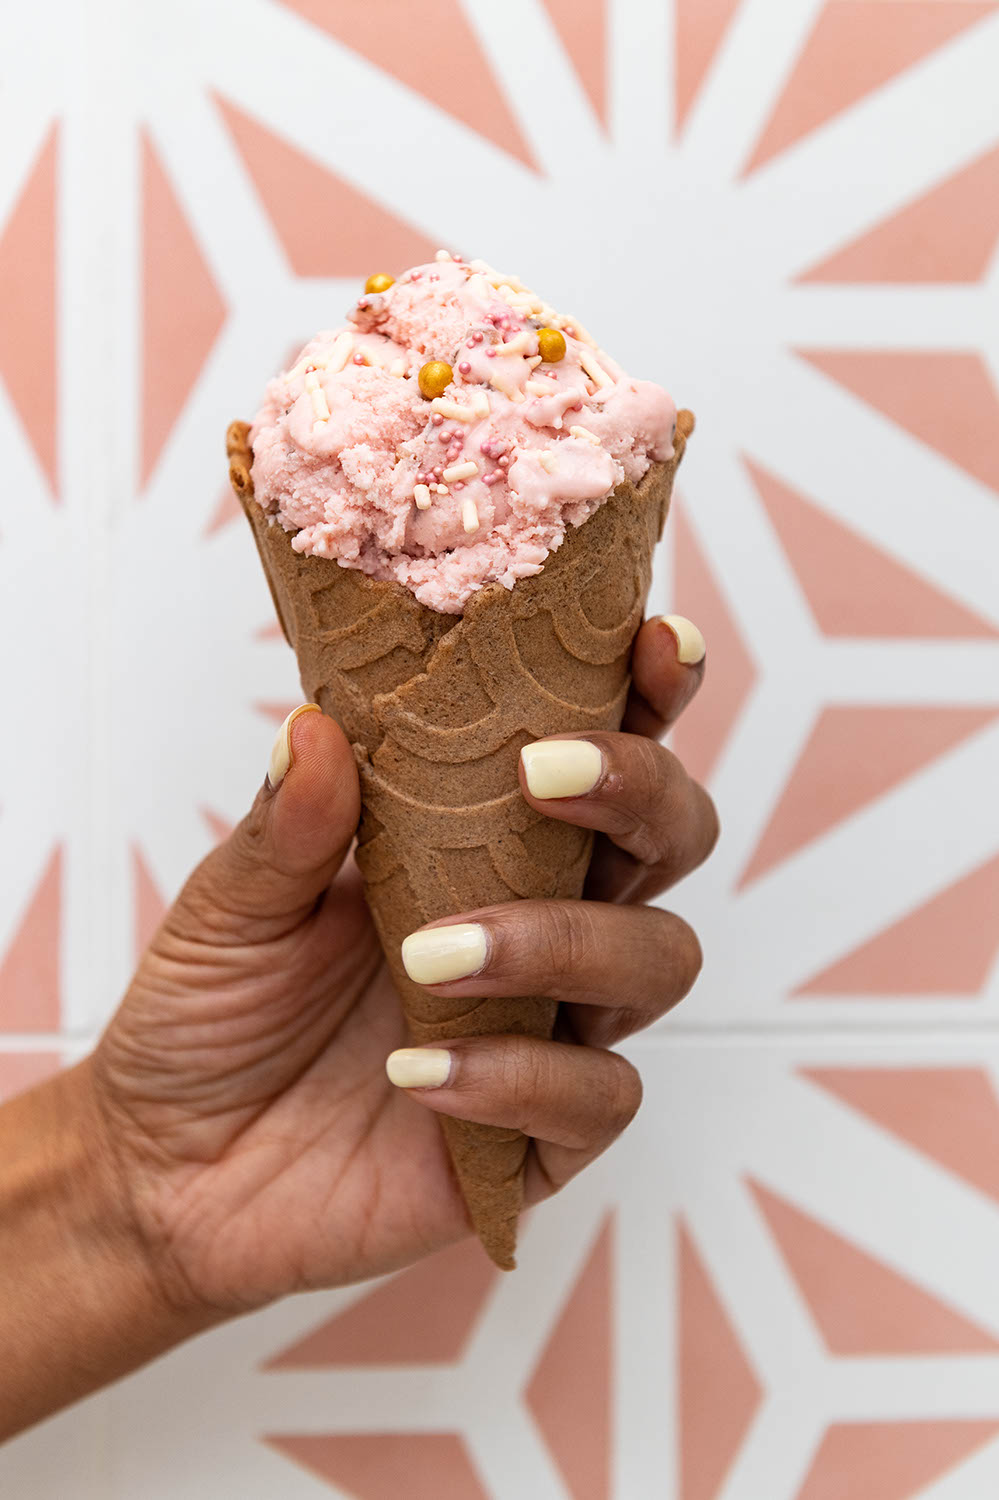 Morgan Ione | Chicago + NYC Food Photographer - Malai Ice Cream Cone